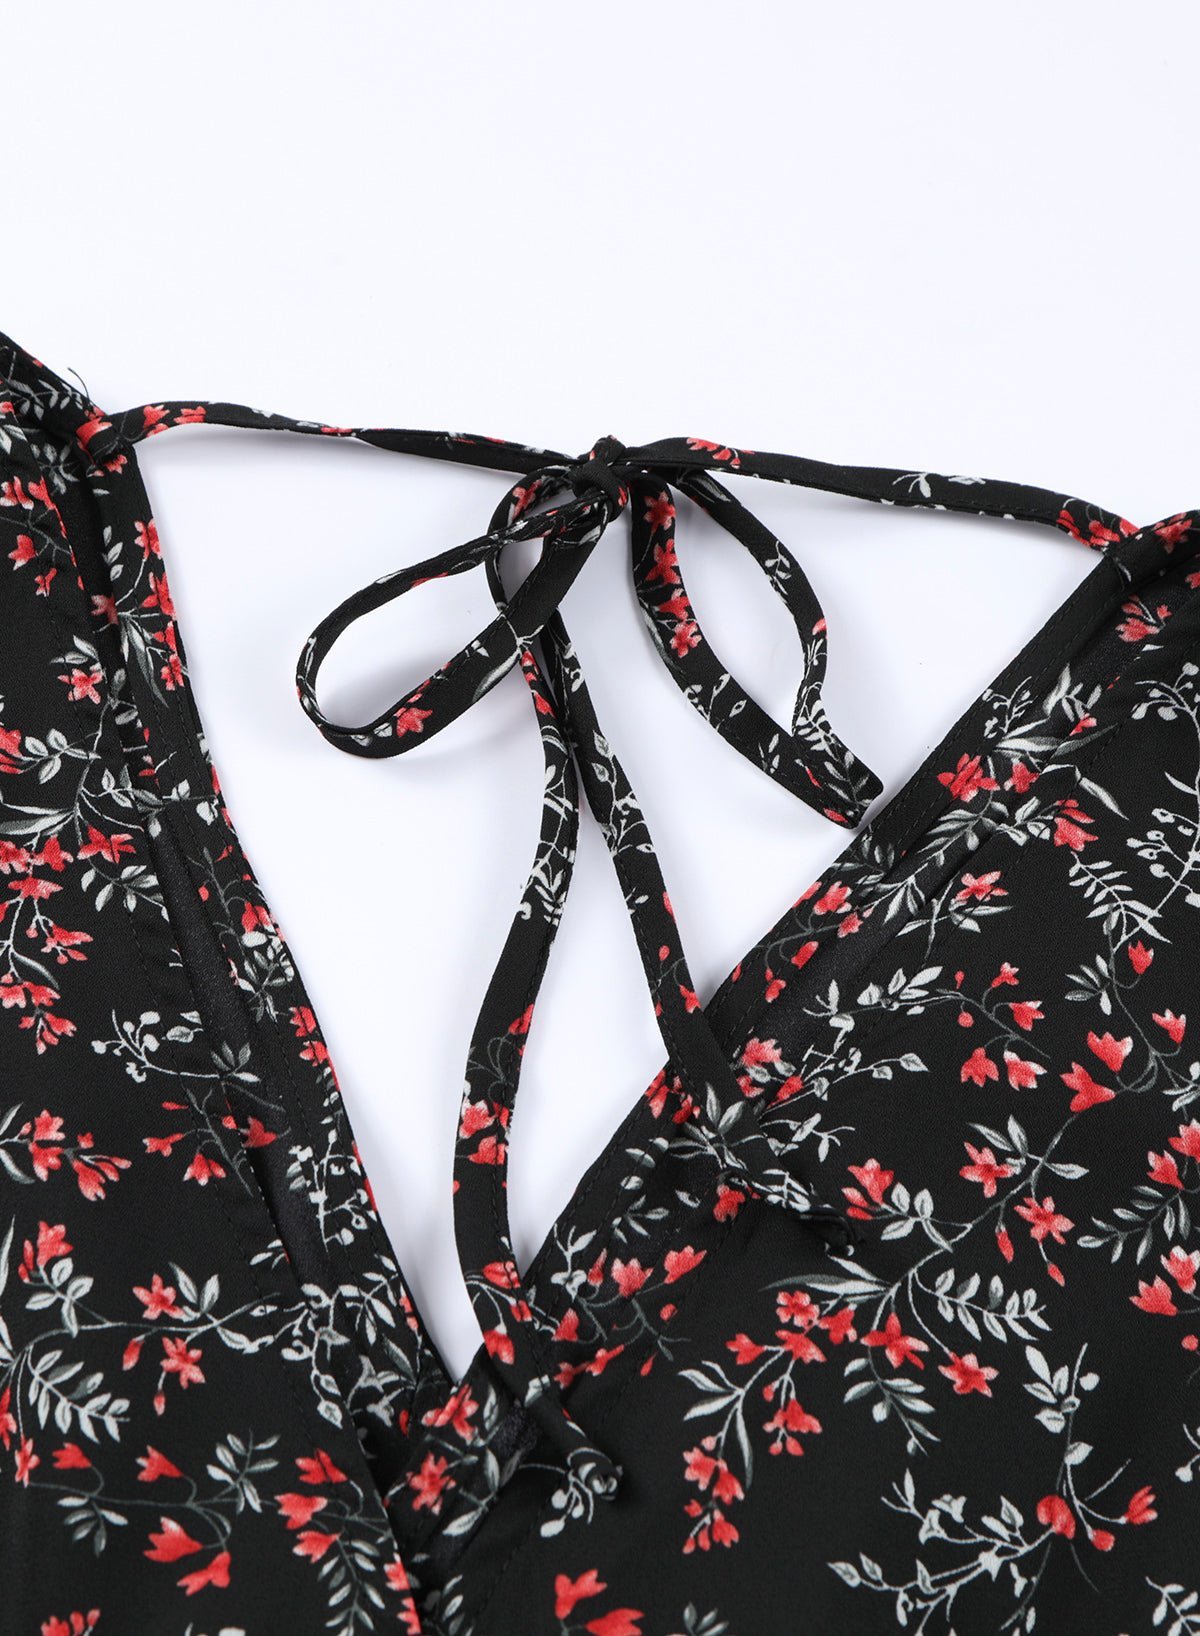 Black Floral Ruffled Crop Top and Maxi Skirt | Fashionsarah.com